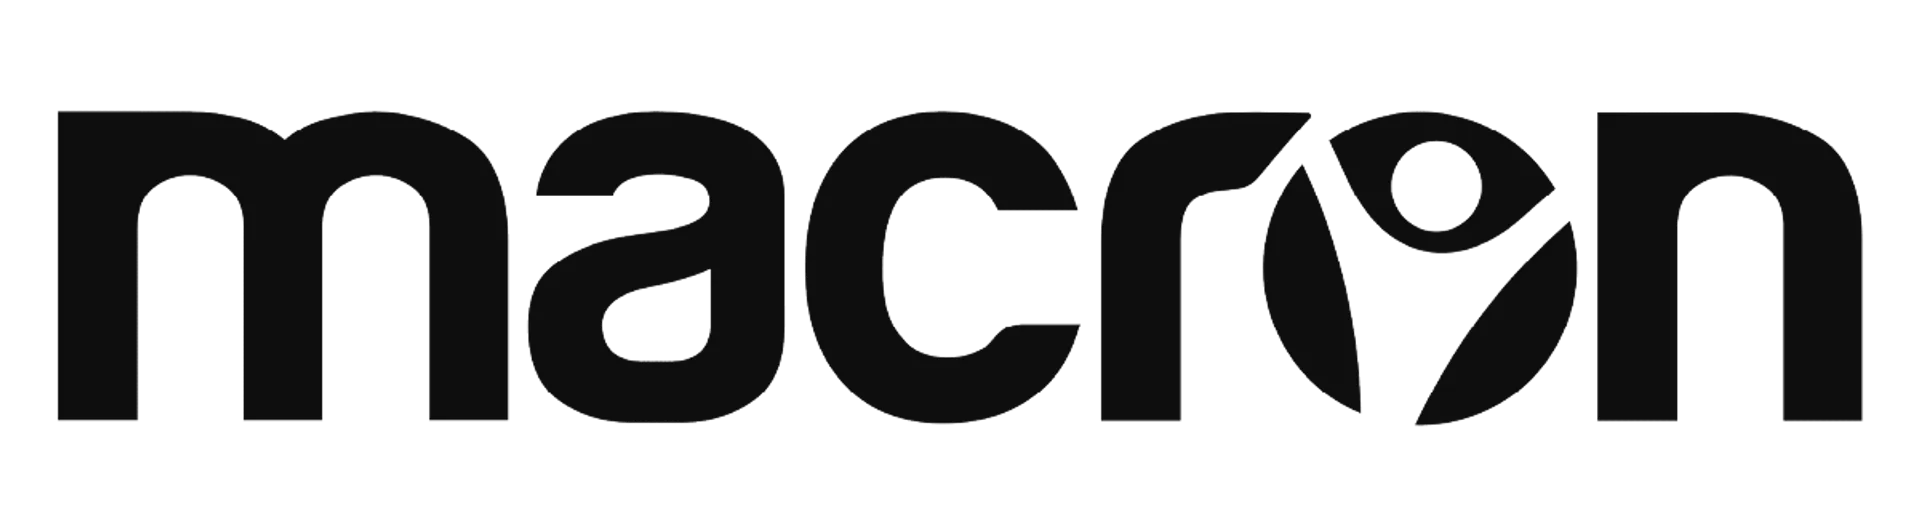 MACRO logo